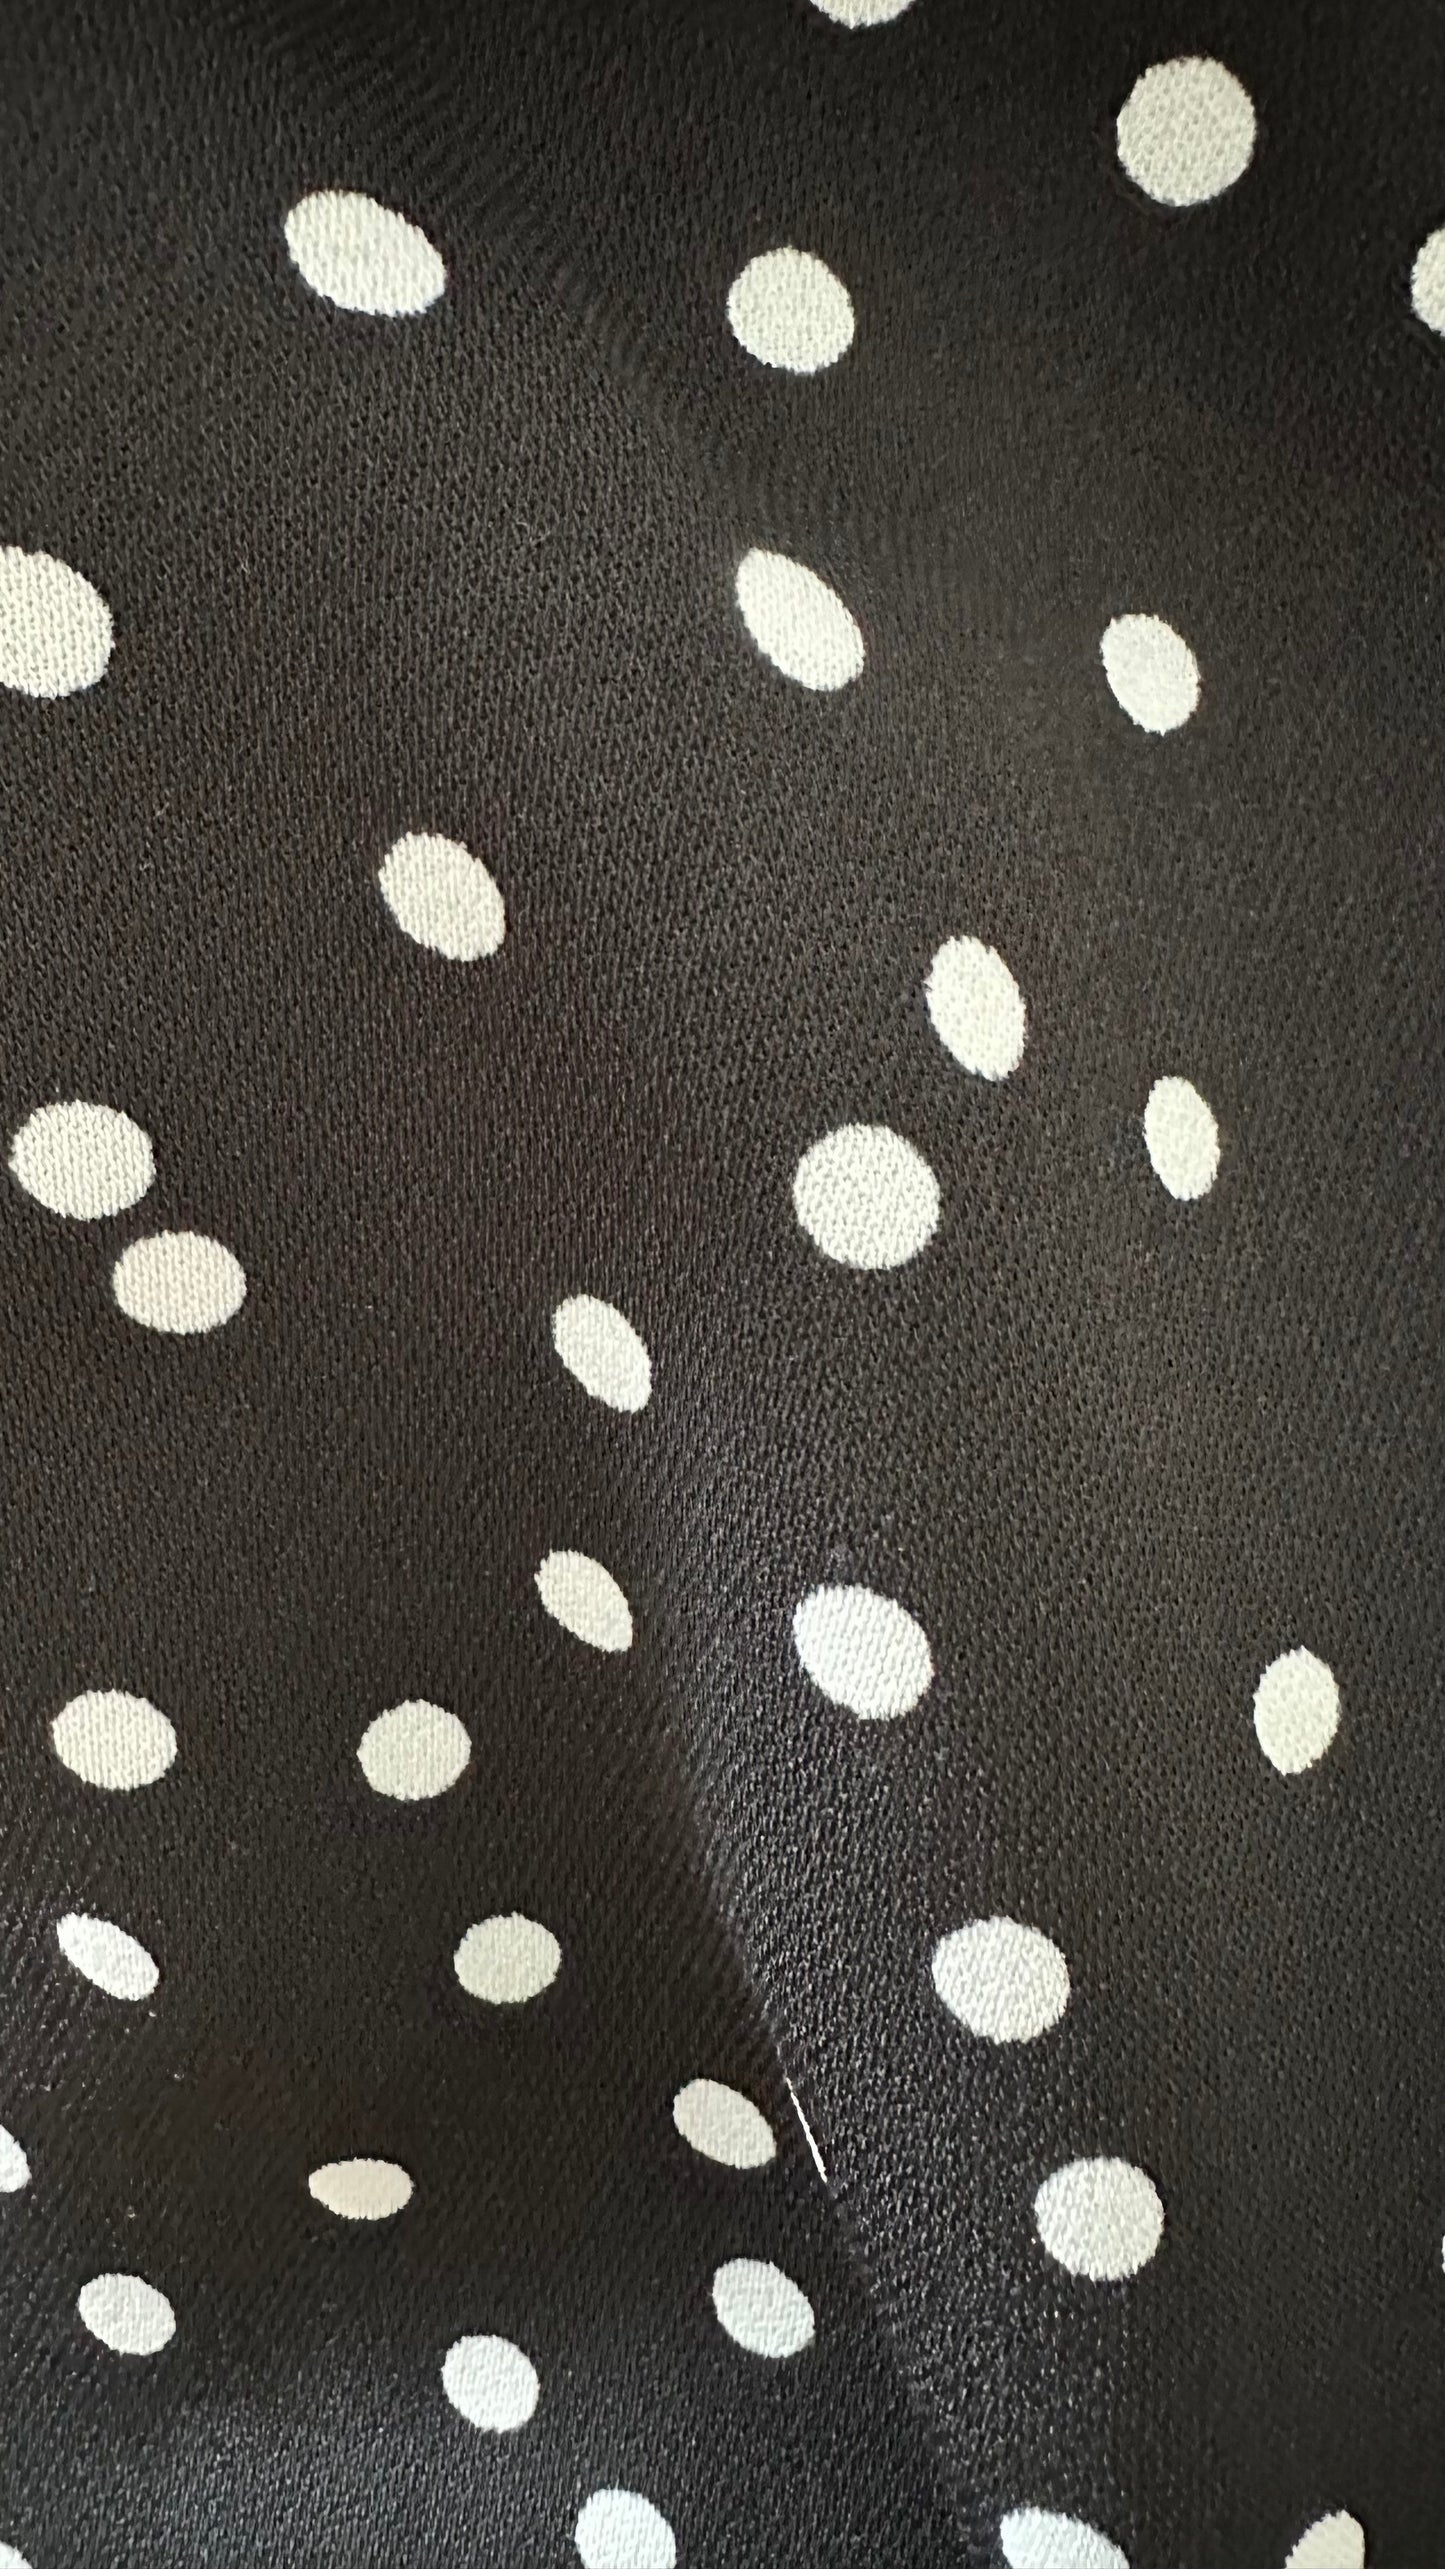 Warehouse black white polka dot jumpsuit Playsuit large UK 10 vgc